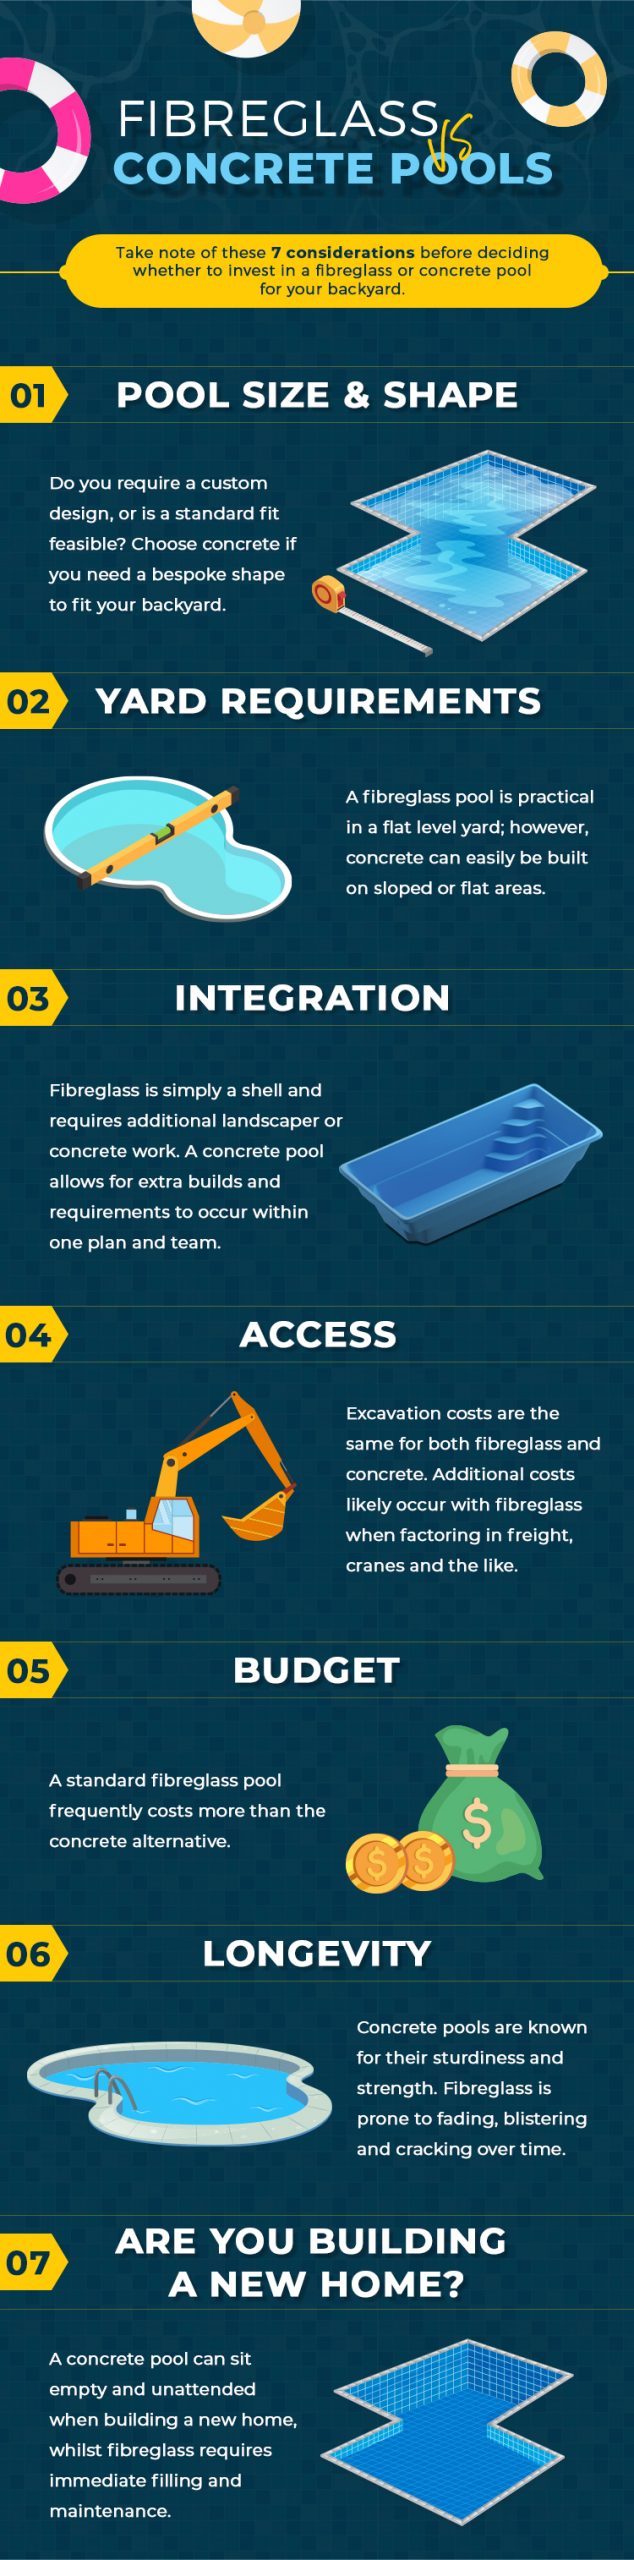 Fibreglass VS Concrete Pools - infographic